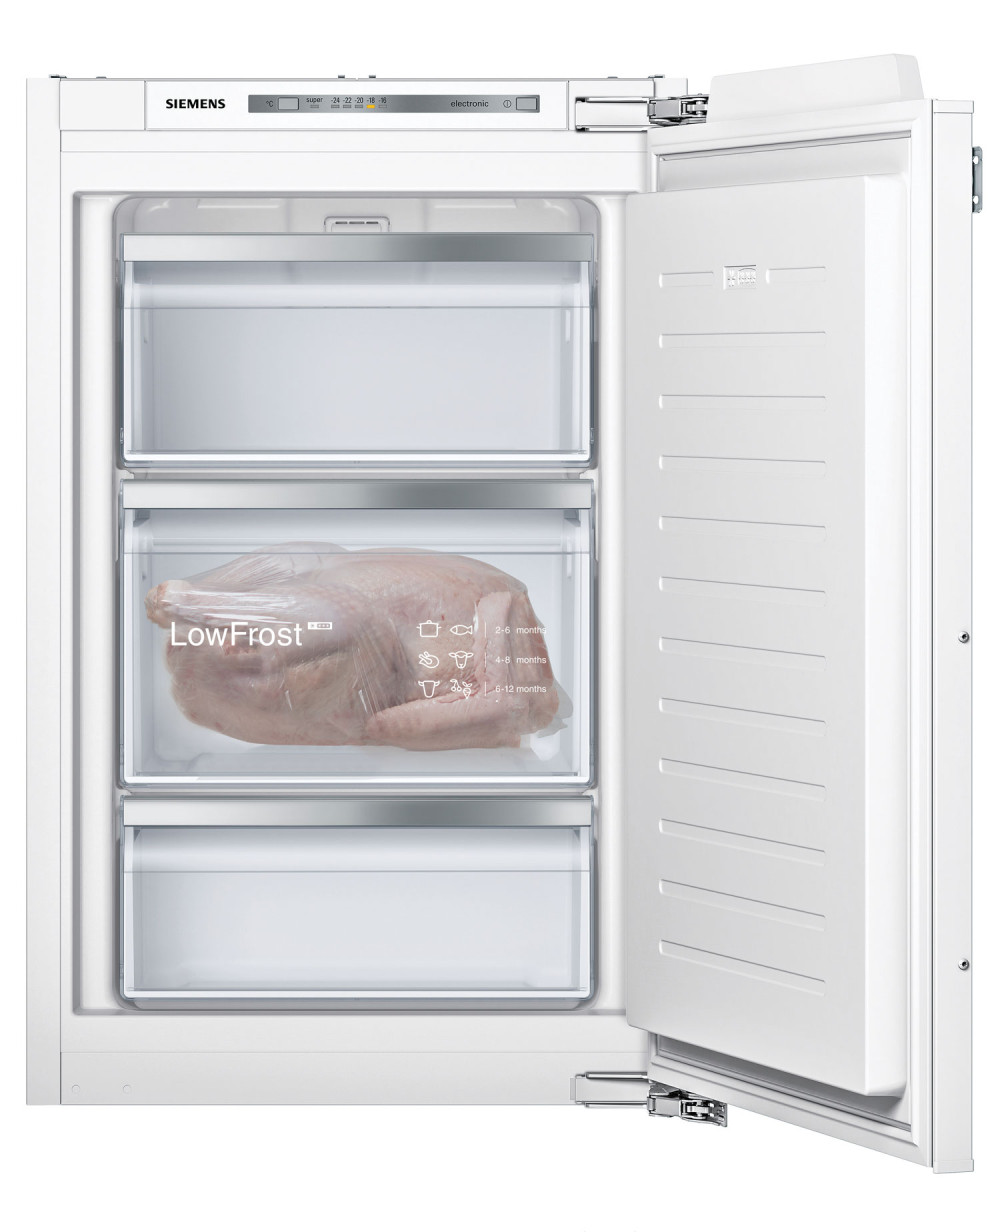 Siemens GI21VAFE0 iQ500 Built-in Freezer featured image